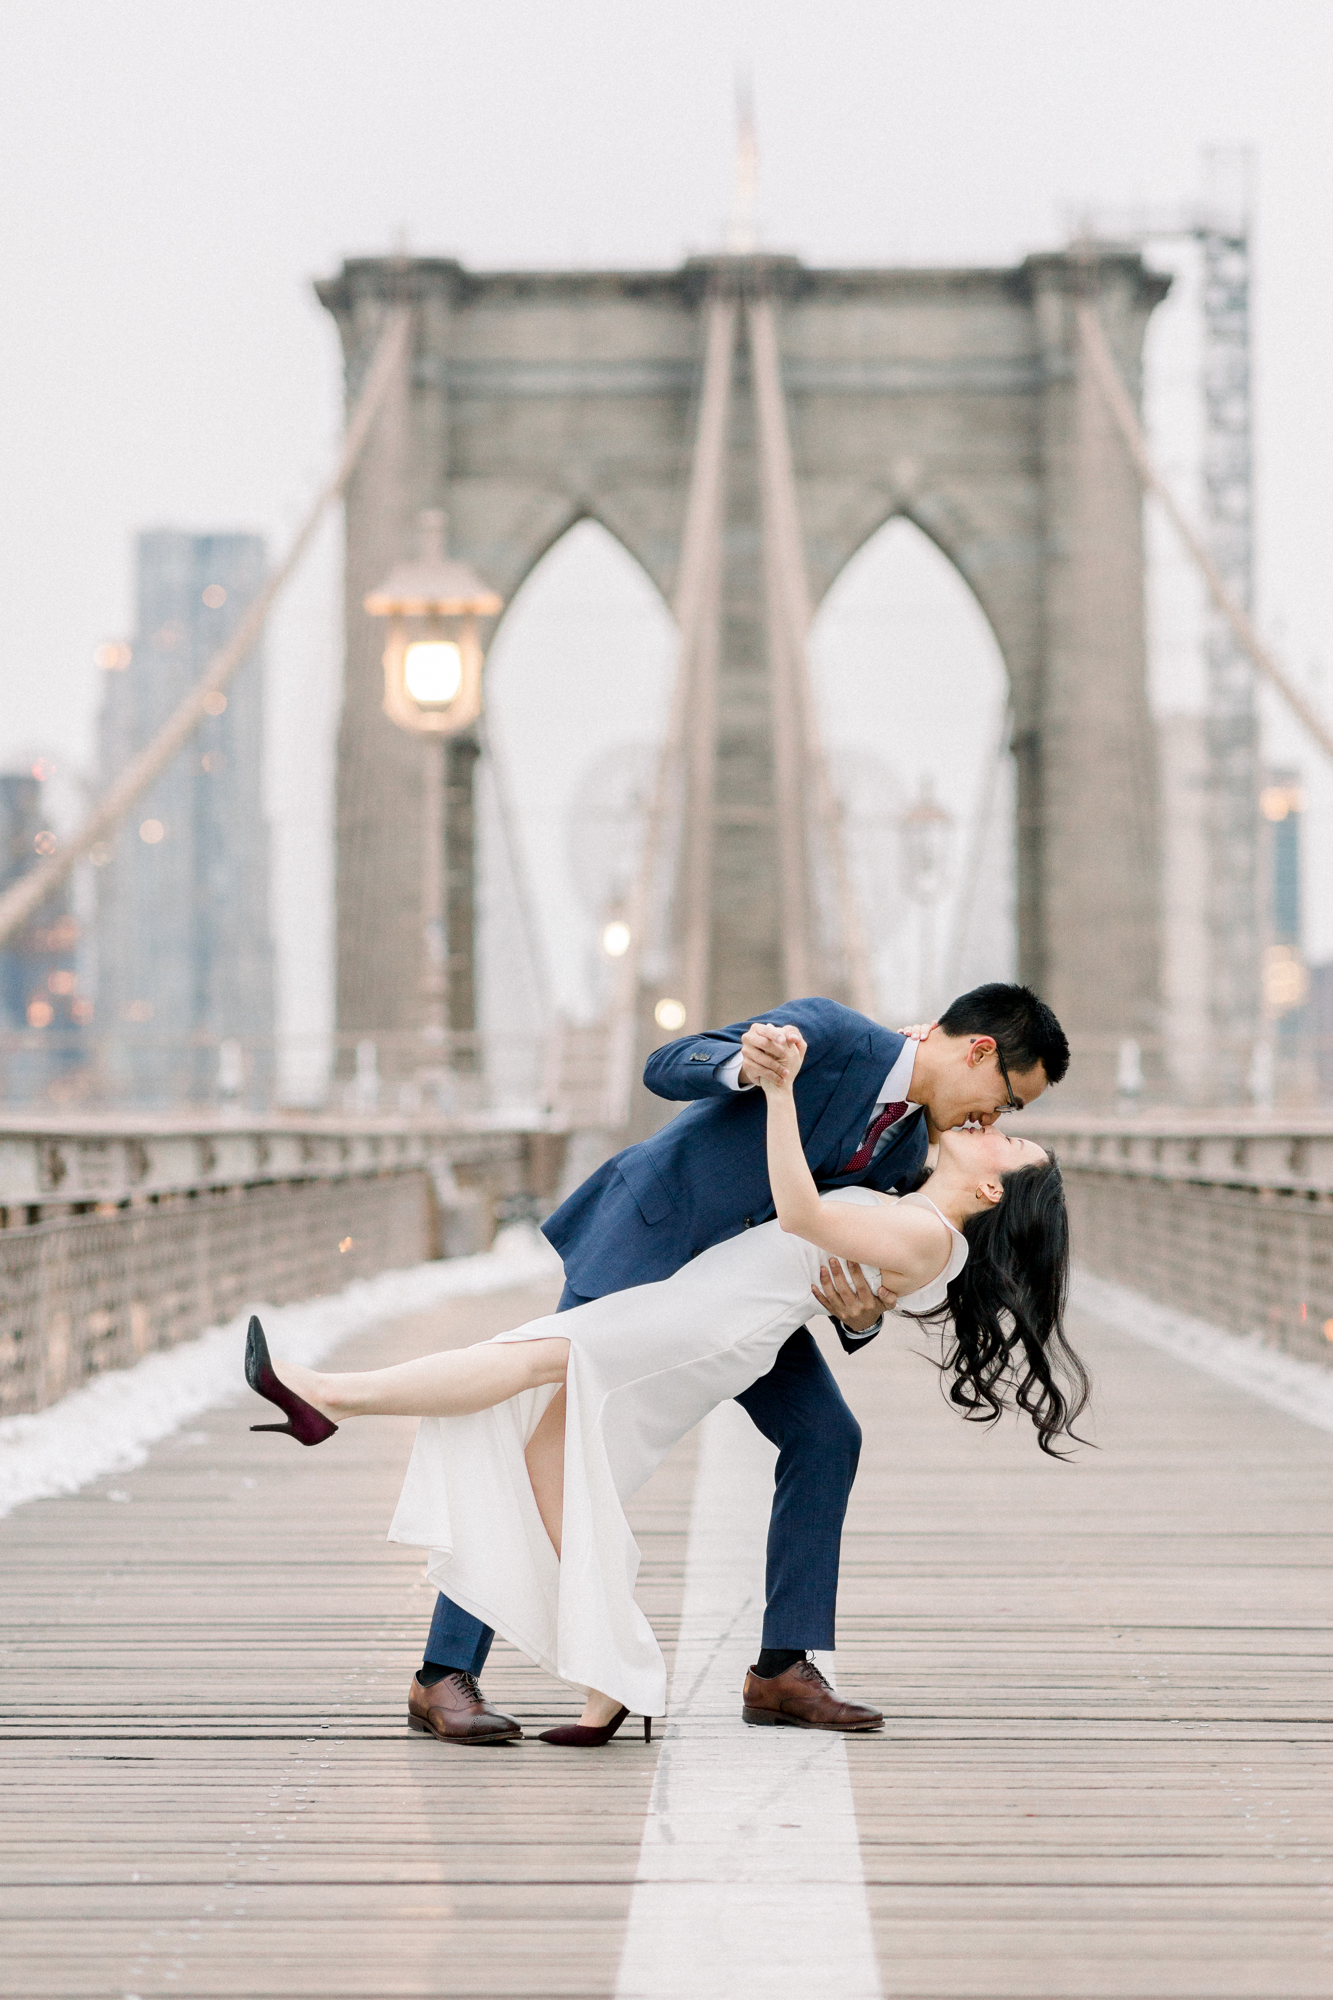 Brooklyn Bridge elopement photographer capturing early morning photos